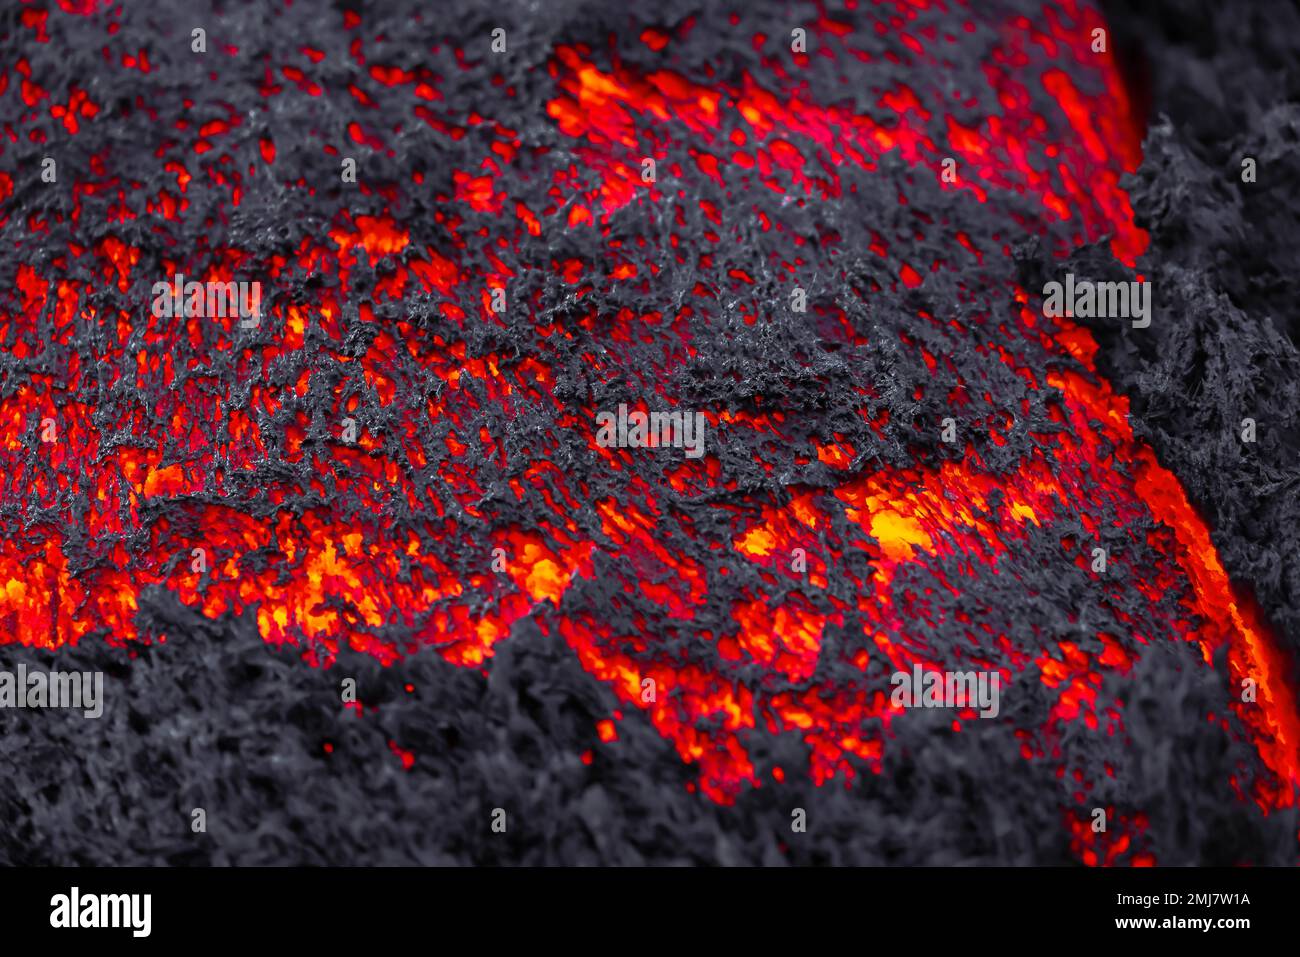 Flujo de lava en una vista de detalle - lava fundida vívida roja Foto de stock